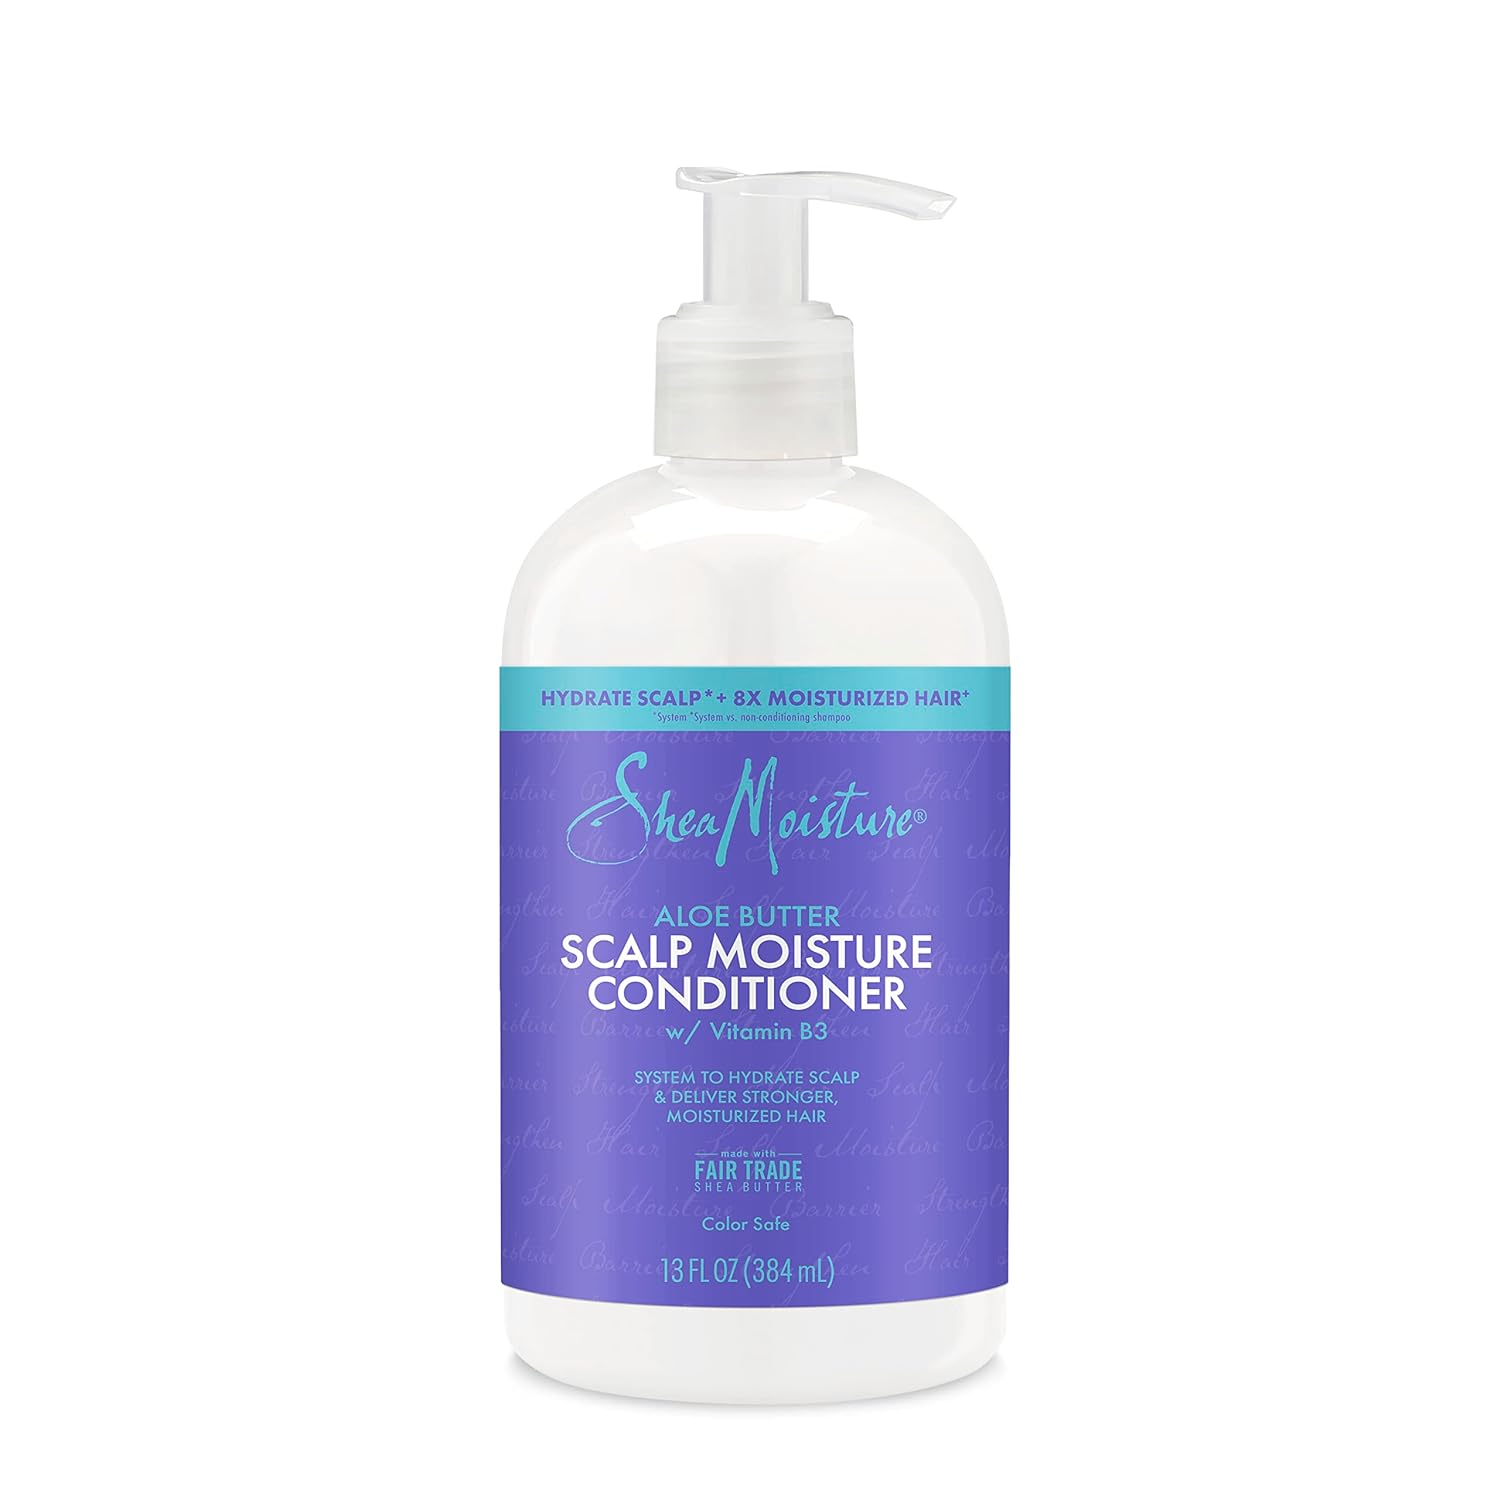 SheaMoisture Scalp Moisture Conditioner Aloe Butter & Vitamin B3 for Moisturized Hair Fair Trade, Sulfate-Free 13oz